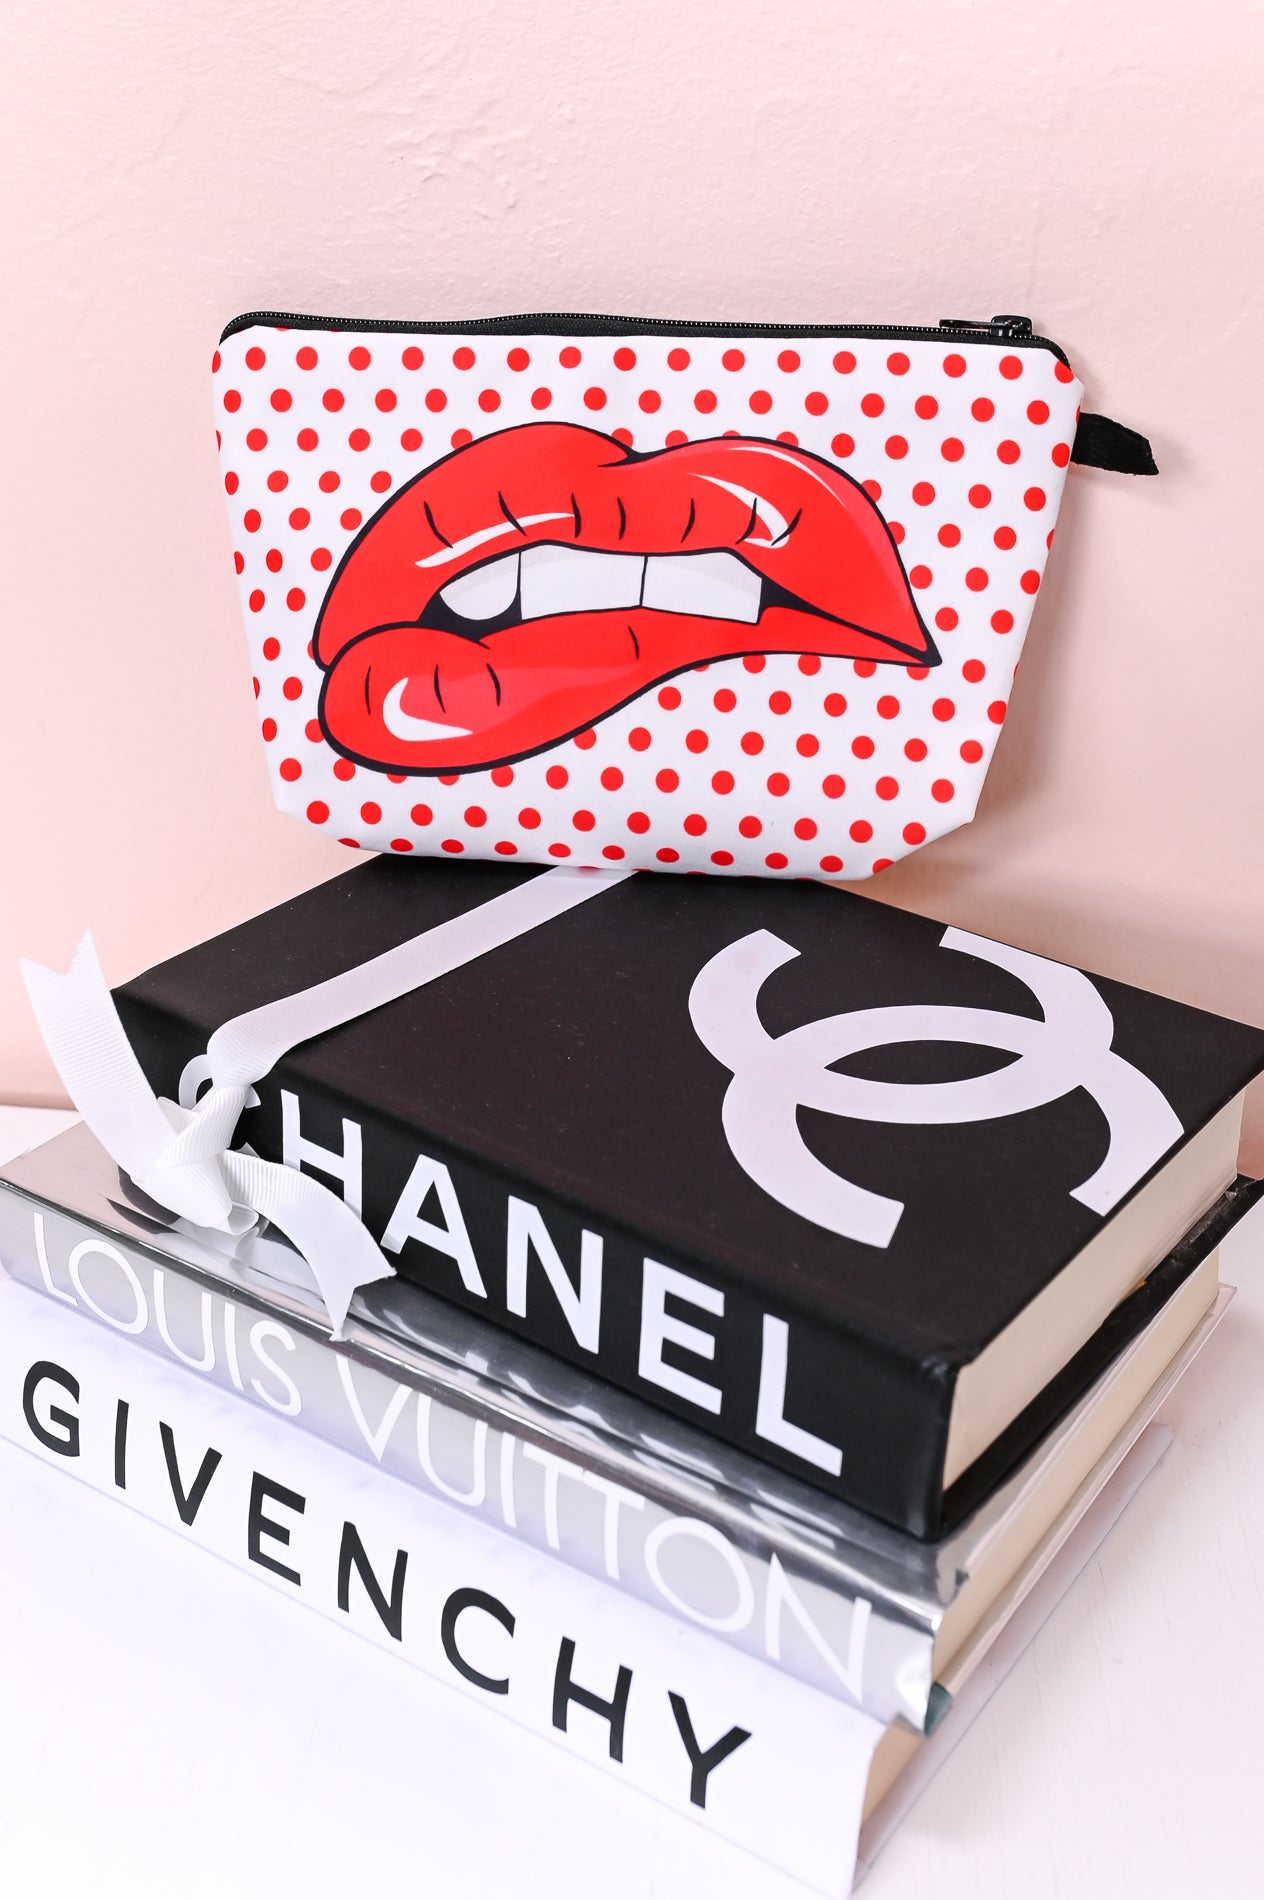 White/Red Polka Dot/Lip Printed Makeup Bag - MUB966WH